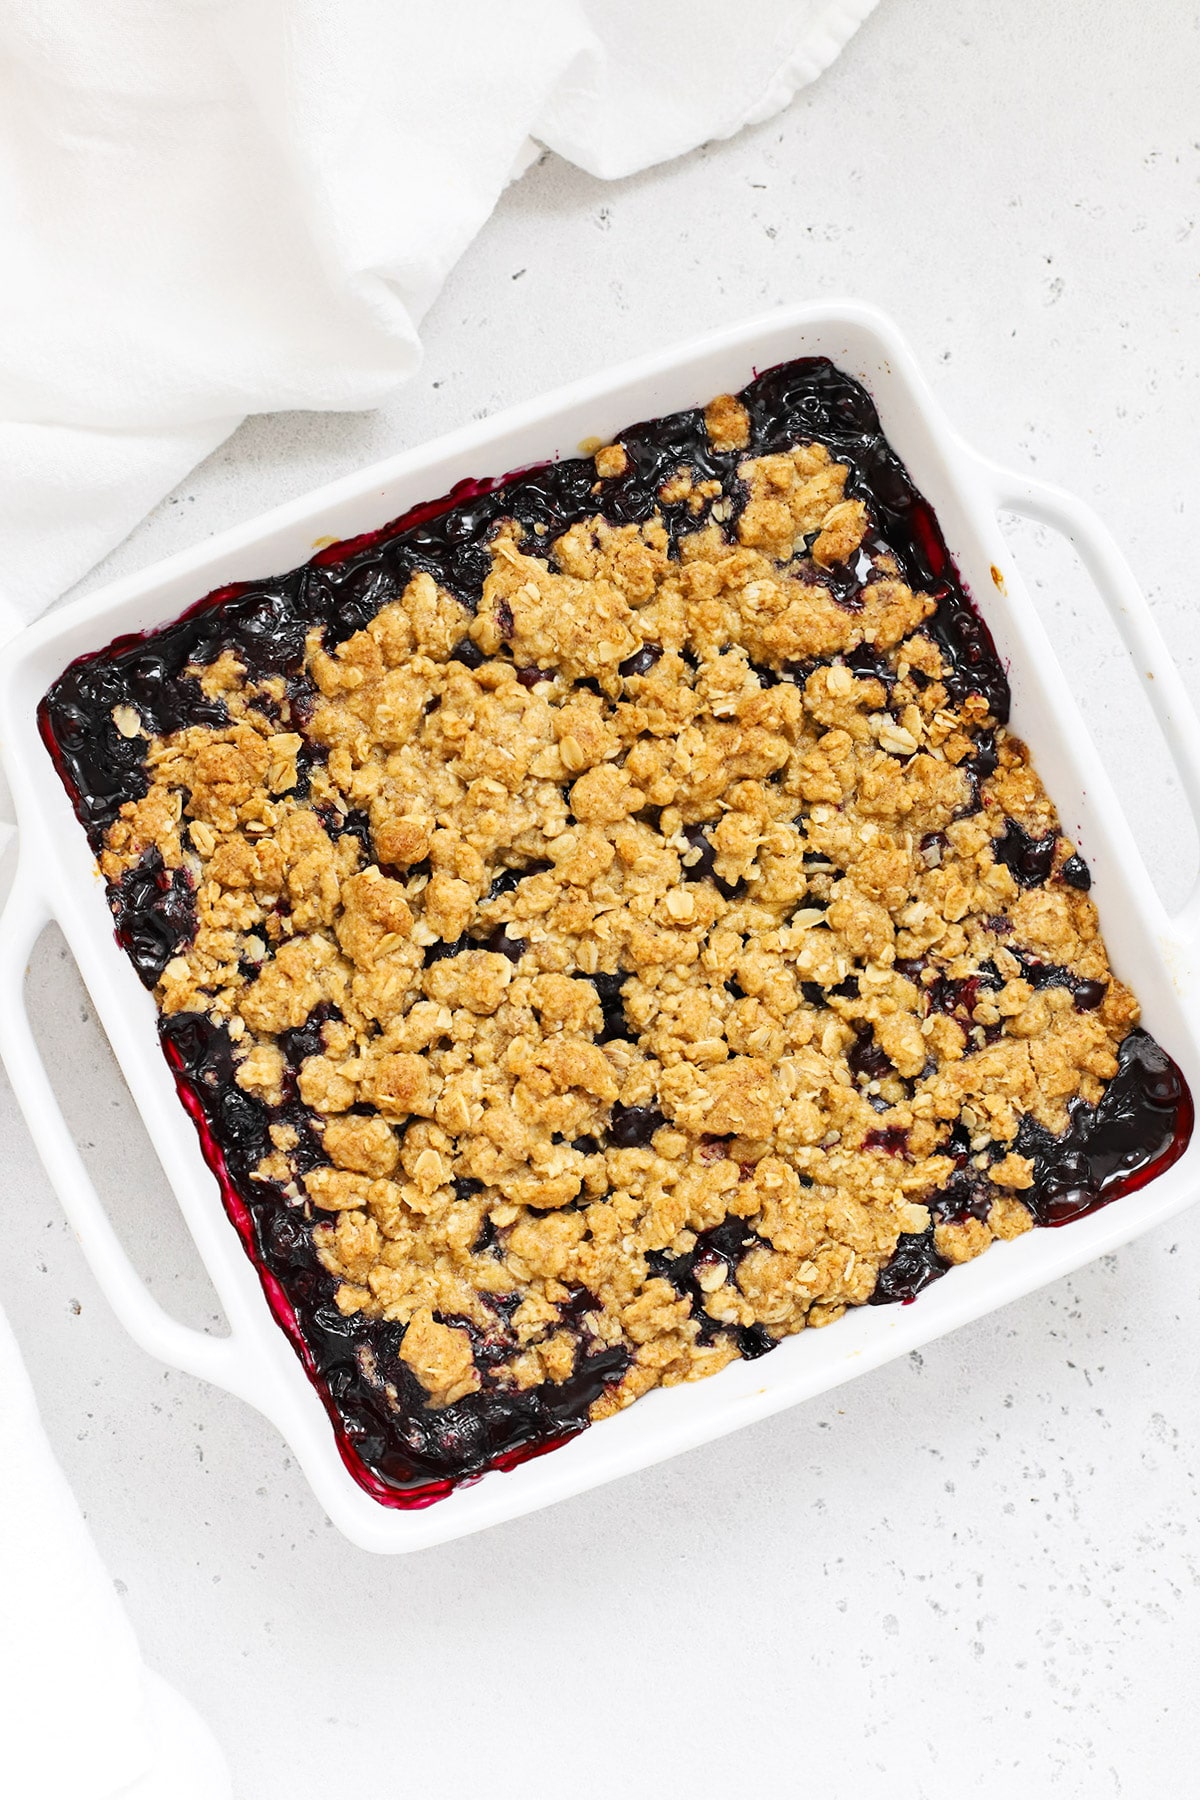 Overhead view of a pan of gluten-free blueberry crisp